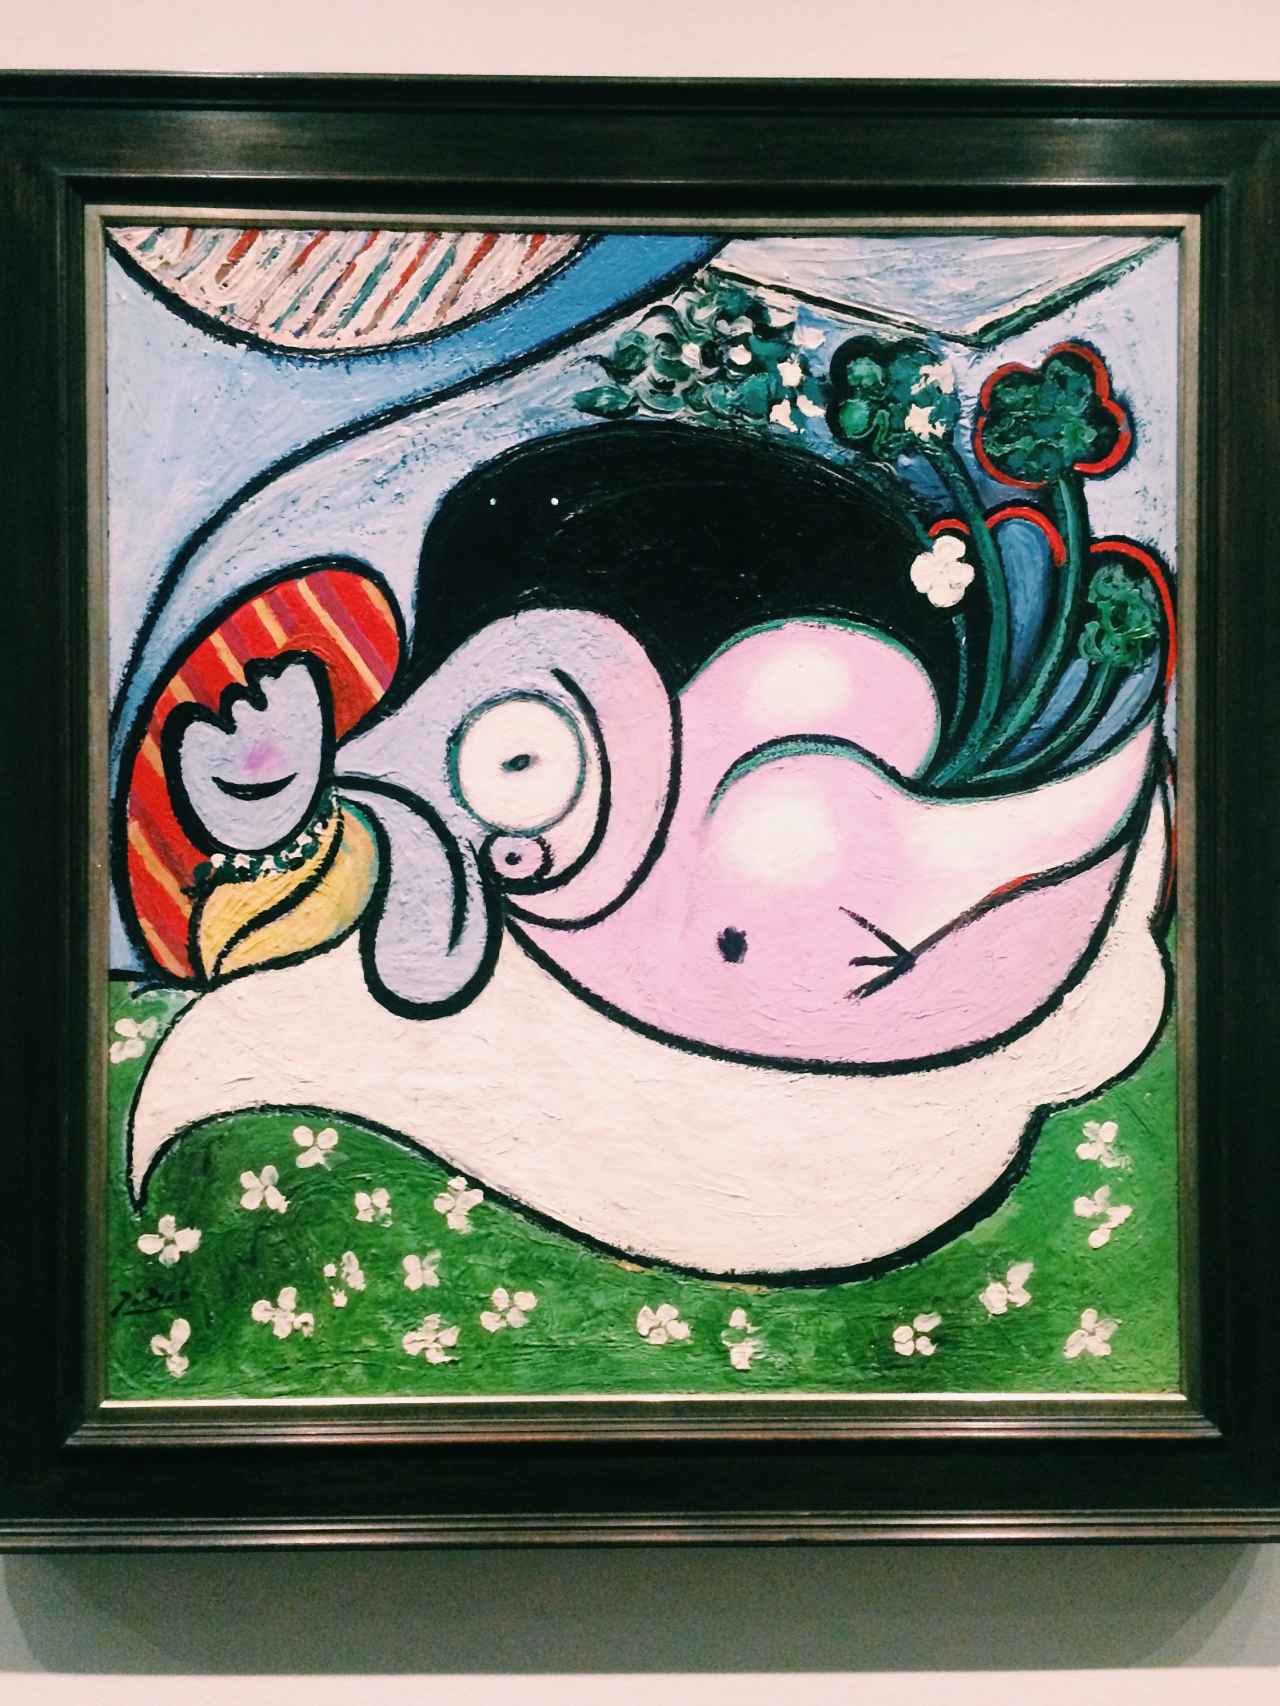 The Dreamer, Picasso.